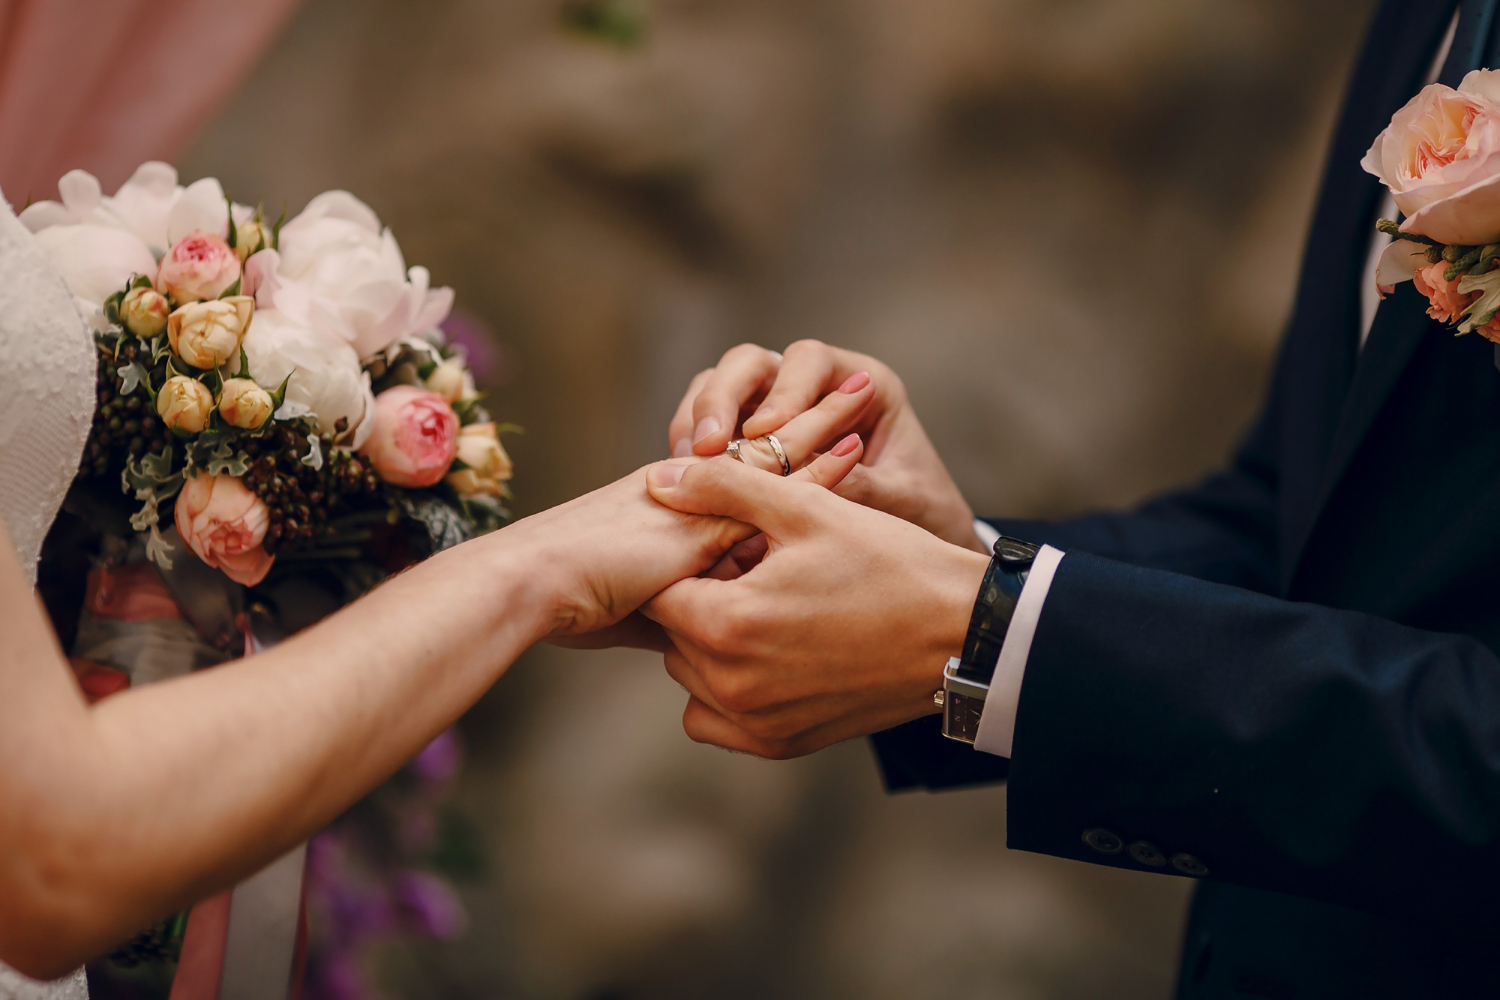 Calon Pengantin Wajib Cek Kesehatan H-3 Bulan Pernikahan 